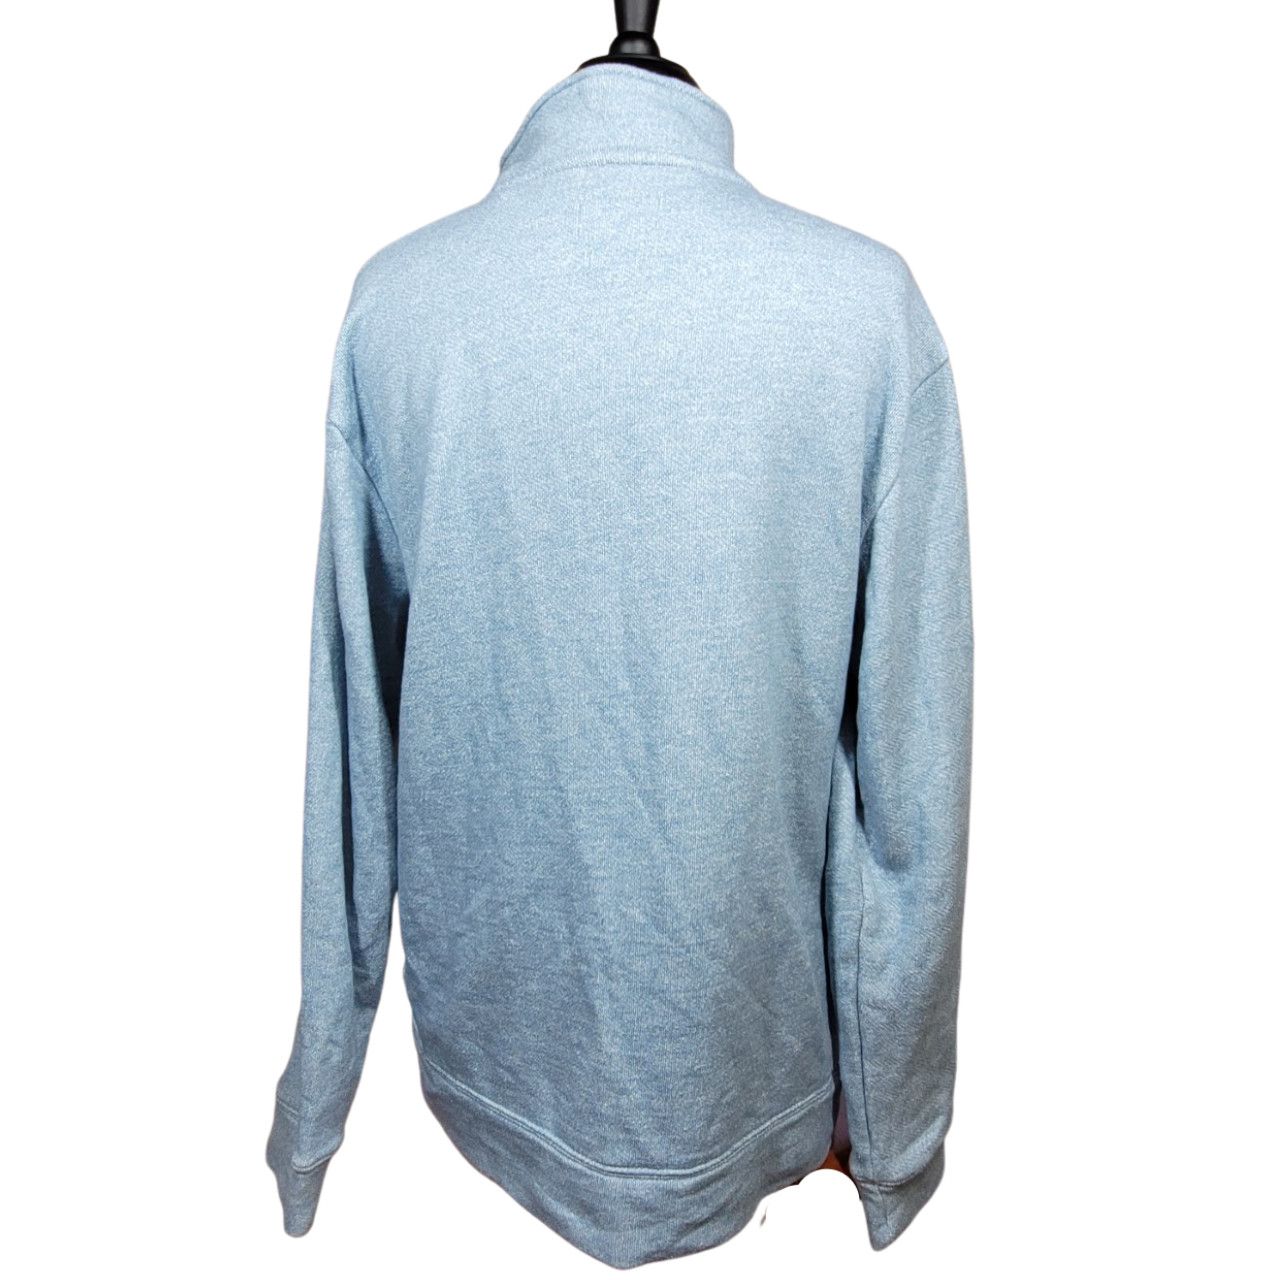 Quicksilver Waterman Pointsurf Zip Mock Neck Sweatshirt Size Large Size L / US 10 / IT 46 - 2 Preview